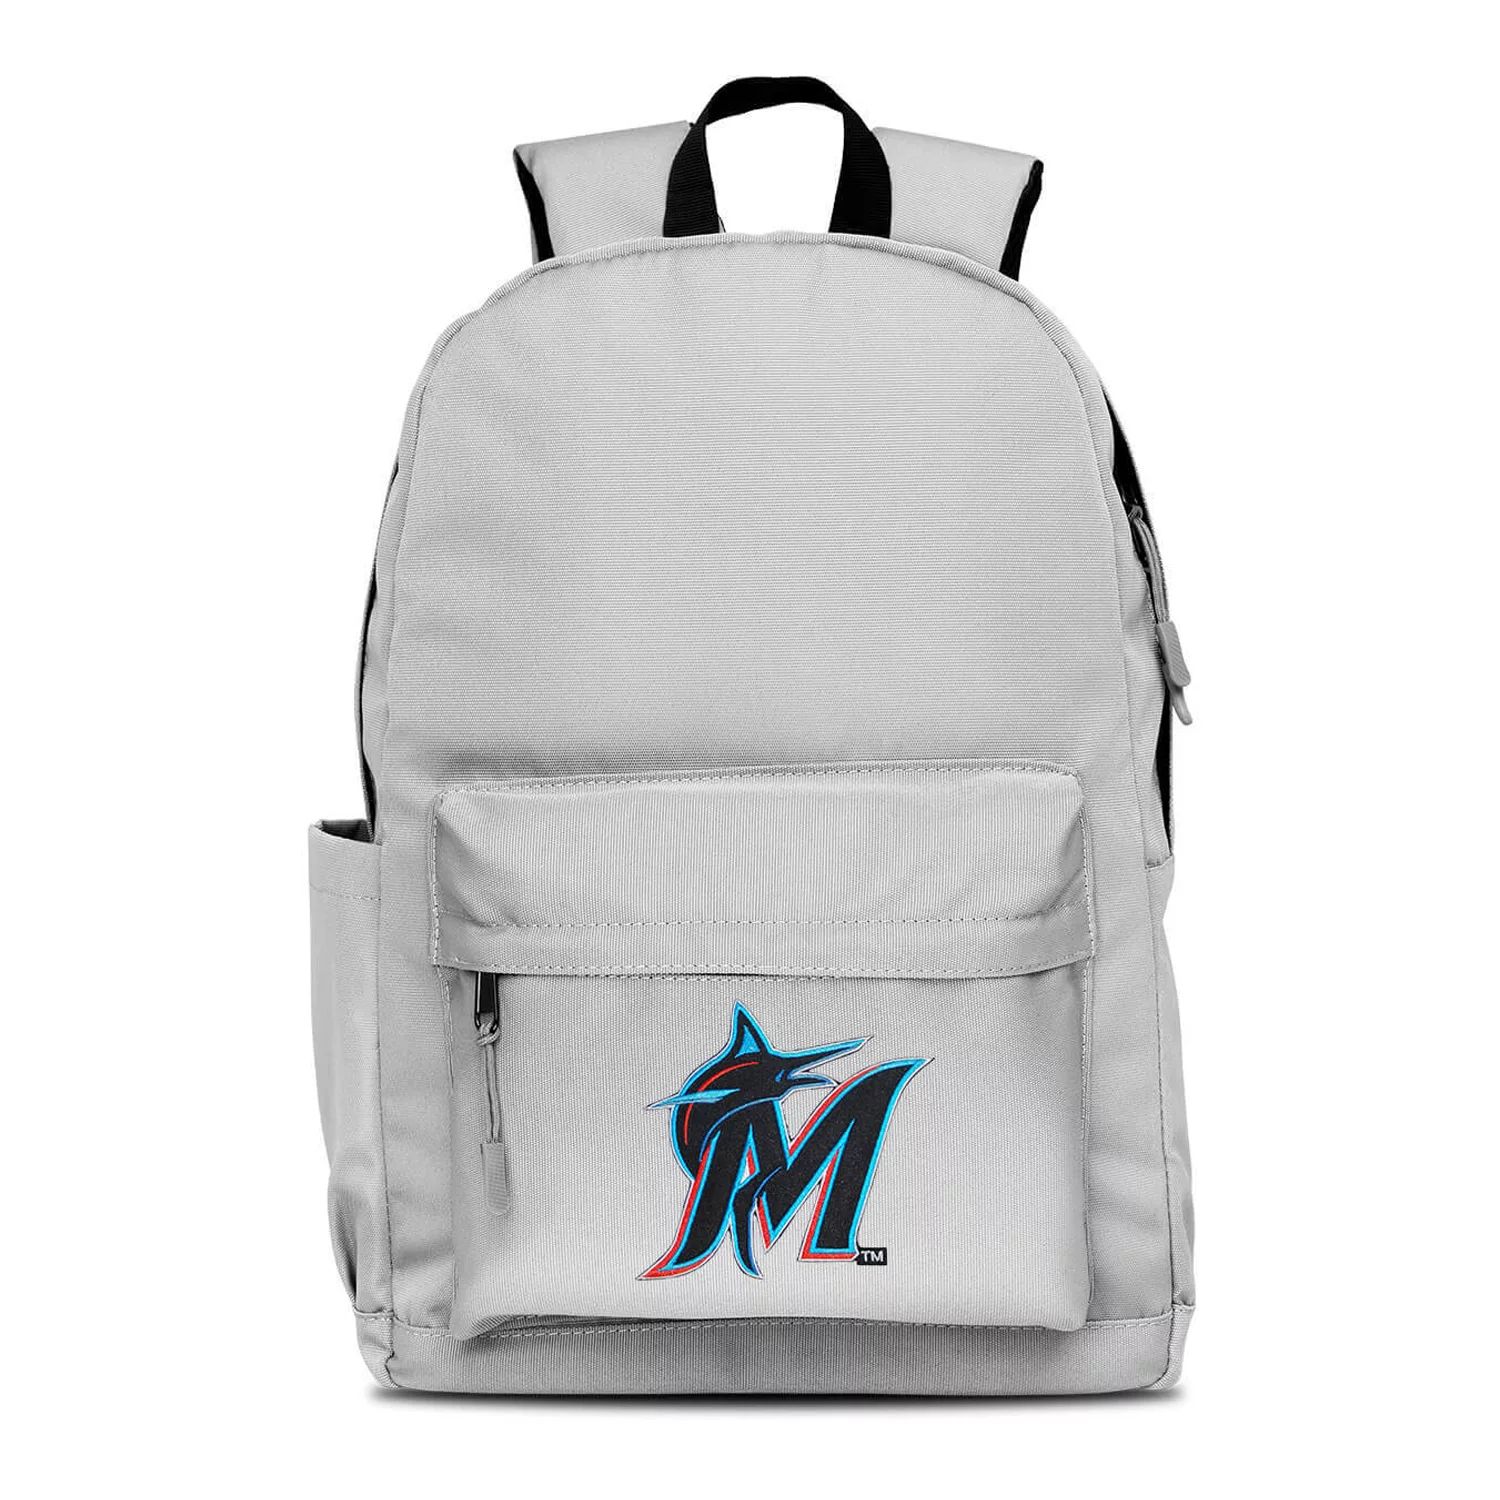 Рюкзак для ноутбука Miami Marlins Campus рюкзак для ноутбука премиум класса miami marlins